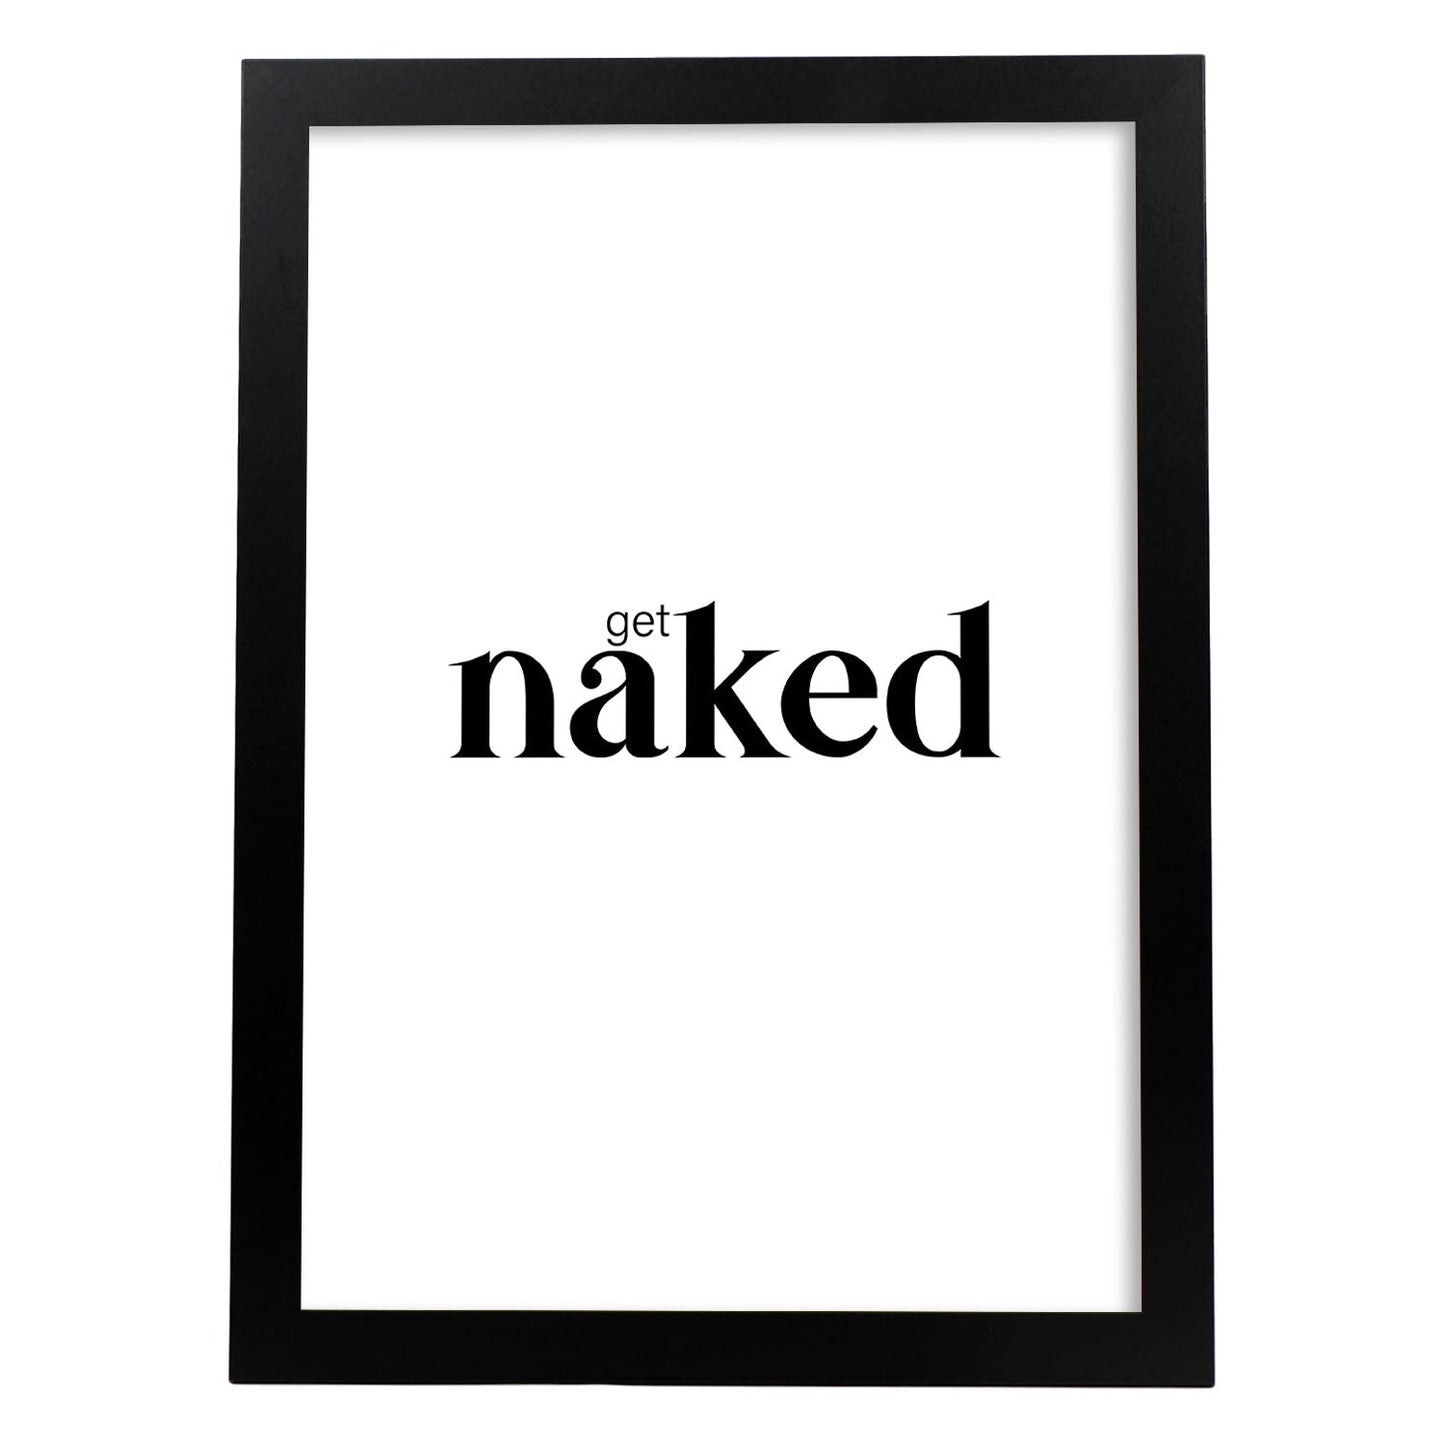 Lamina artistica decorativa con ilustración de get naked estilo Mensaje inspiracional-Artwork-Nacnic-A3-Marco Negro-Nacnic Estudio SL